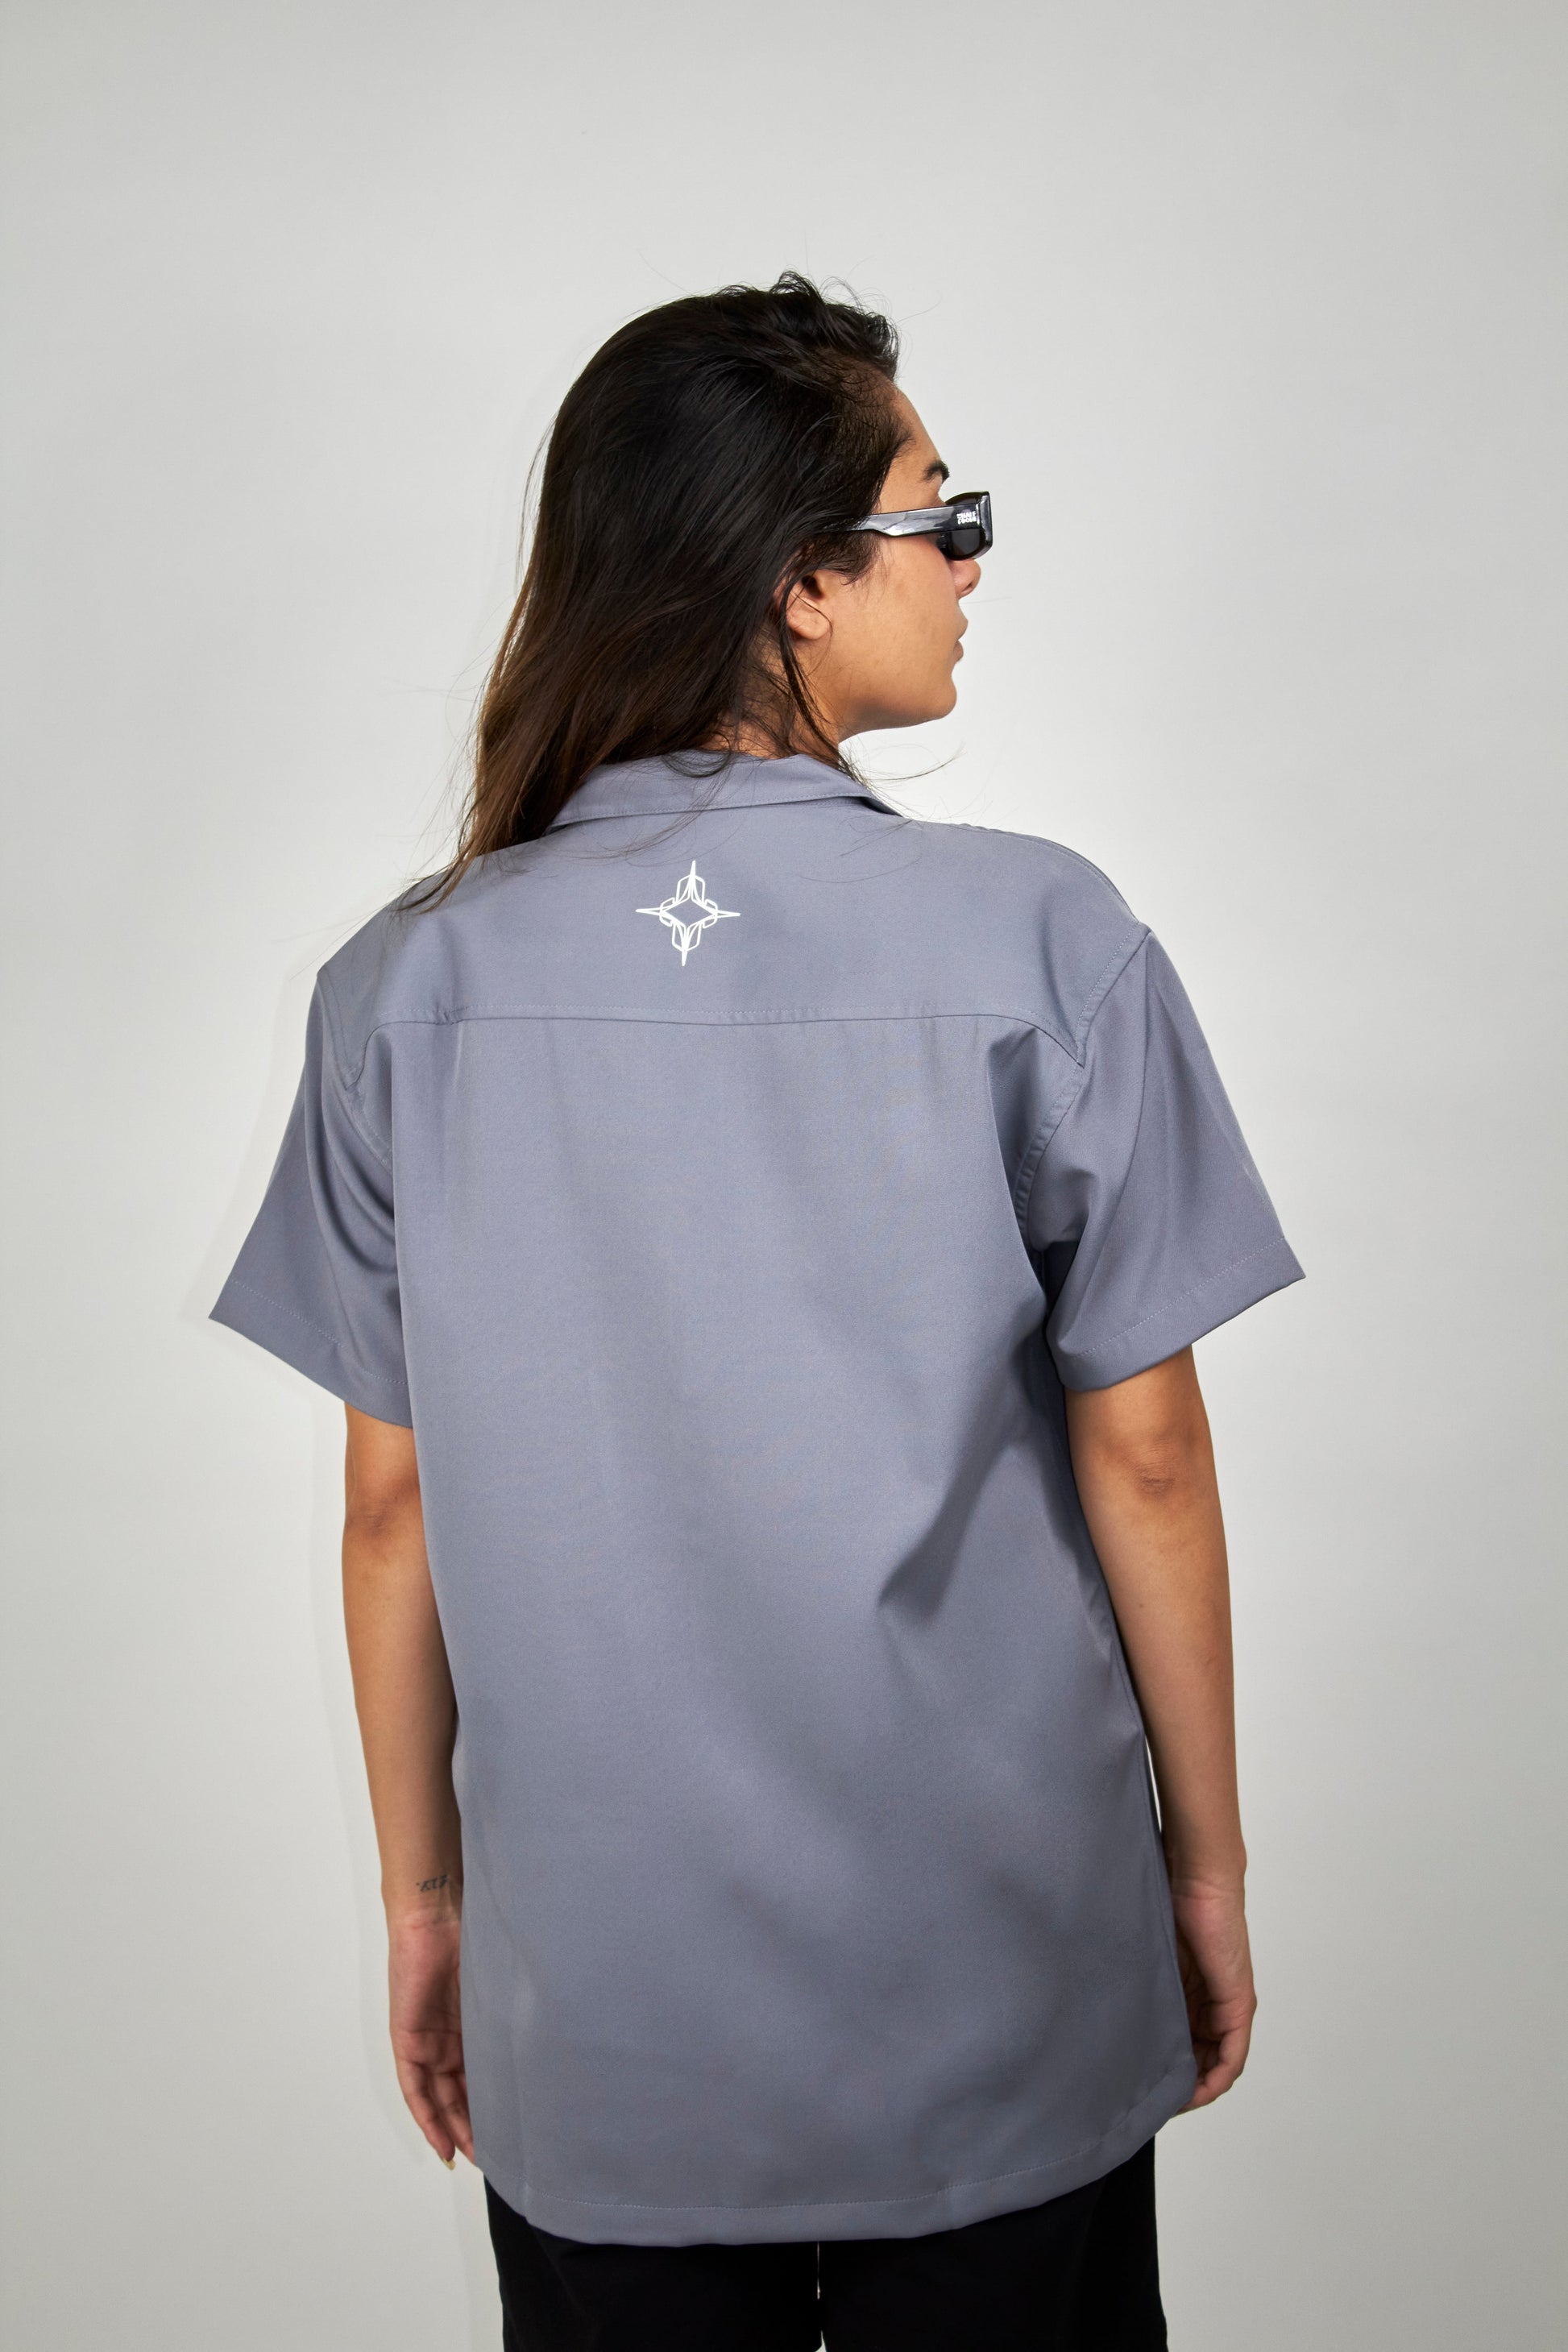 OFFSET SHIRT/ Slate grey (Summer shirts) by Ripoff